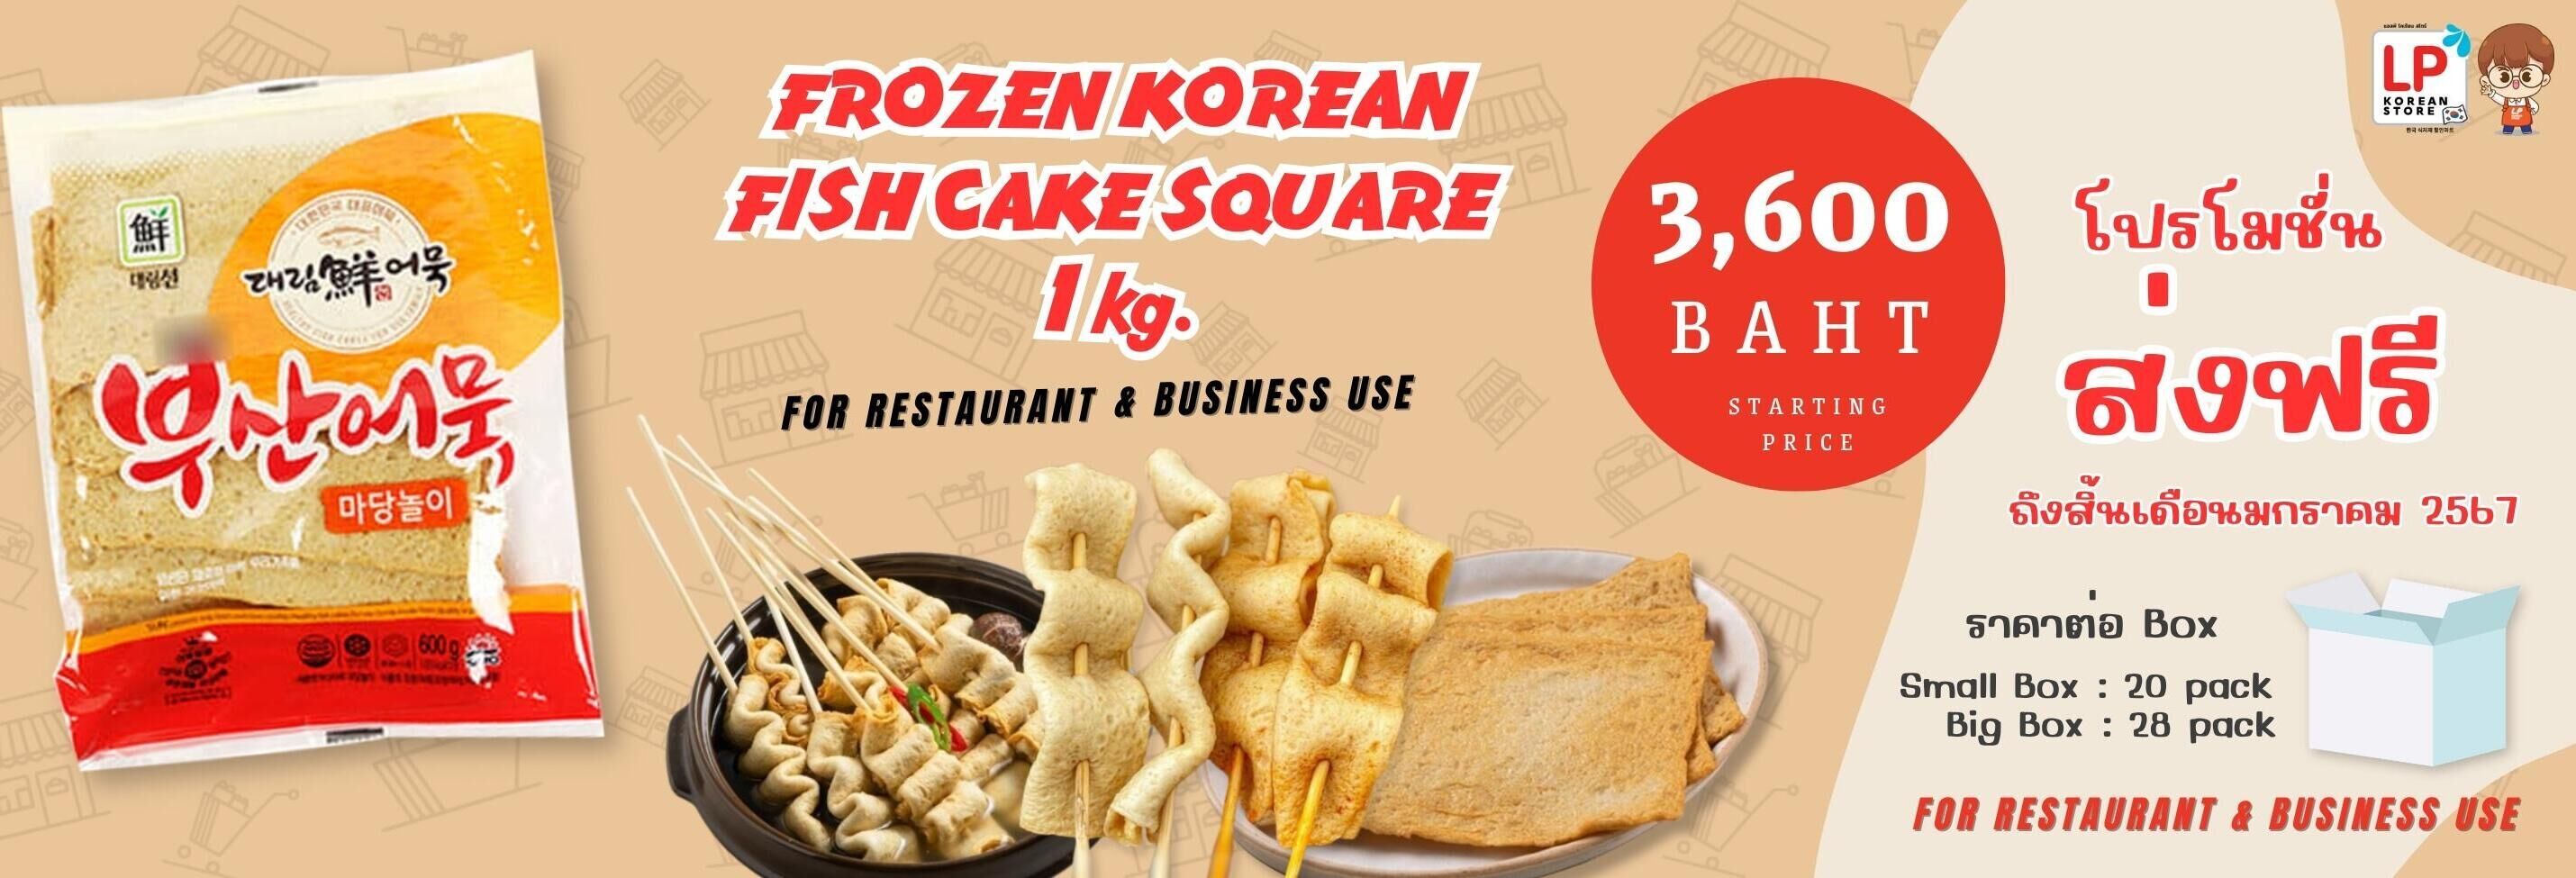 Frozen Korean Fish Cake Square